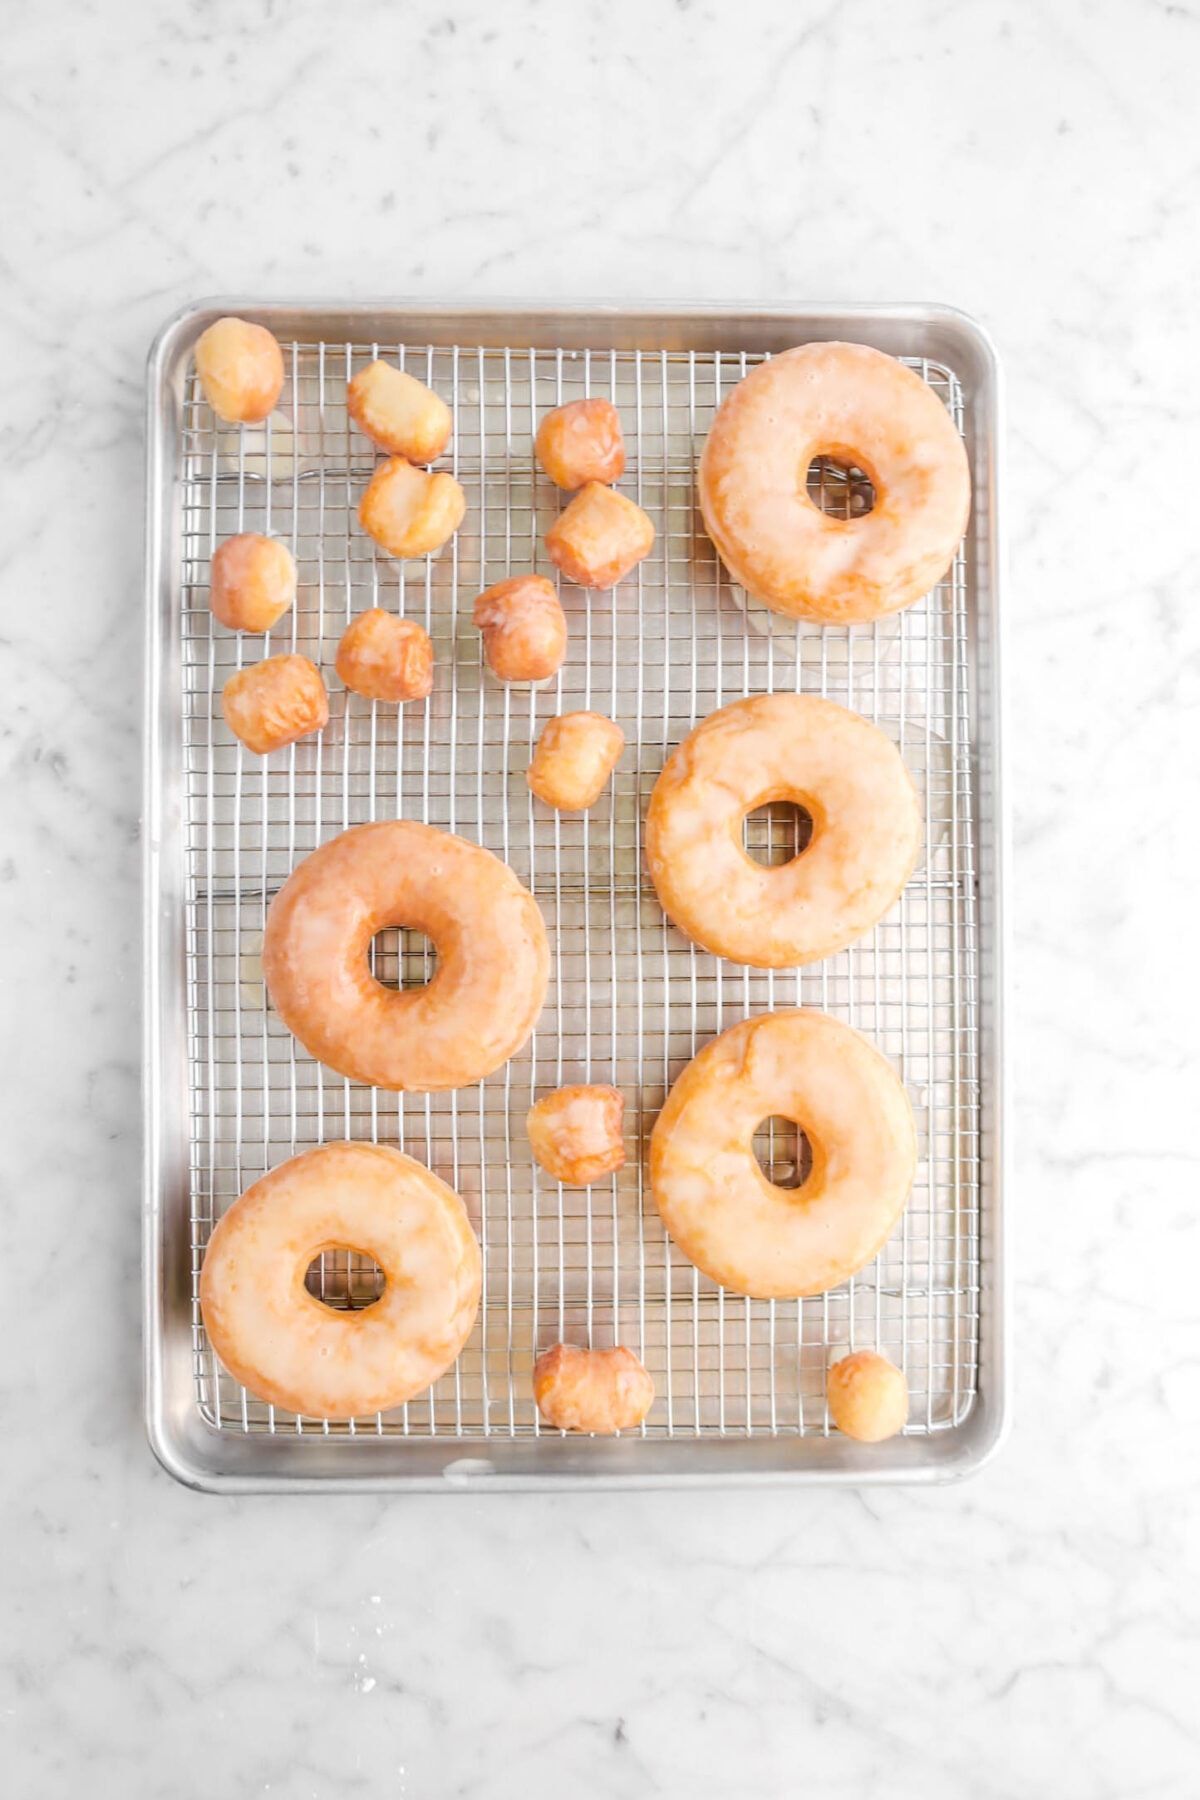 five glazed doughnuts on sheet pan with glazed doughnut holes